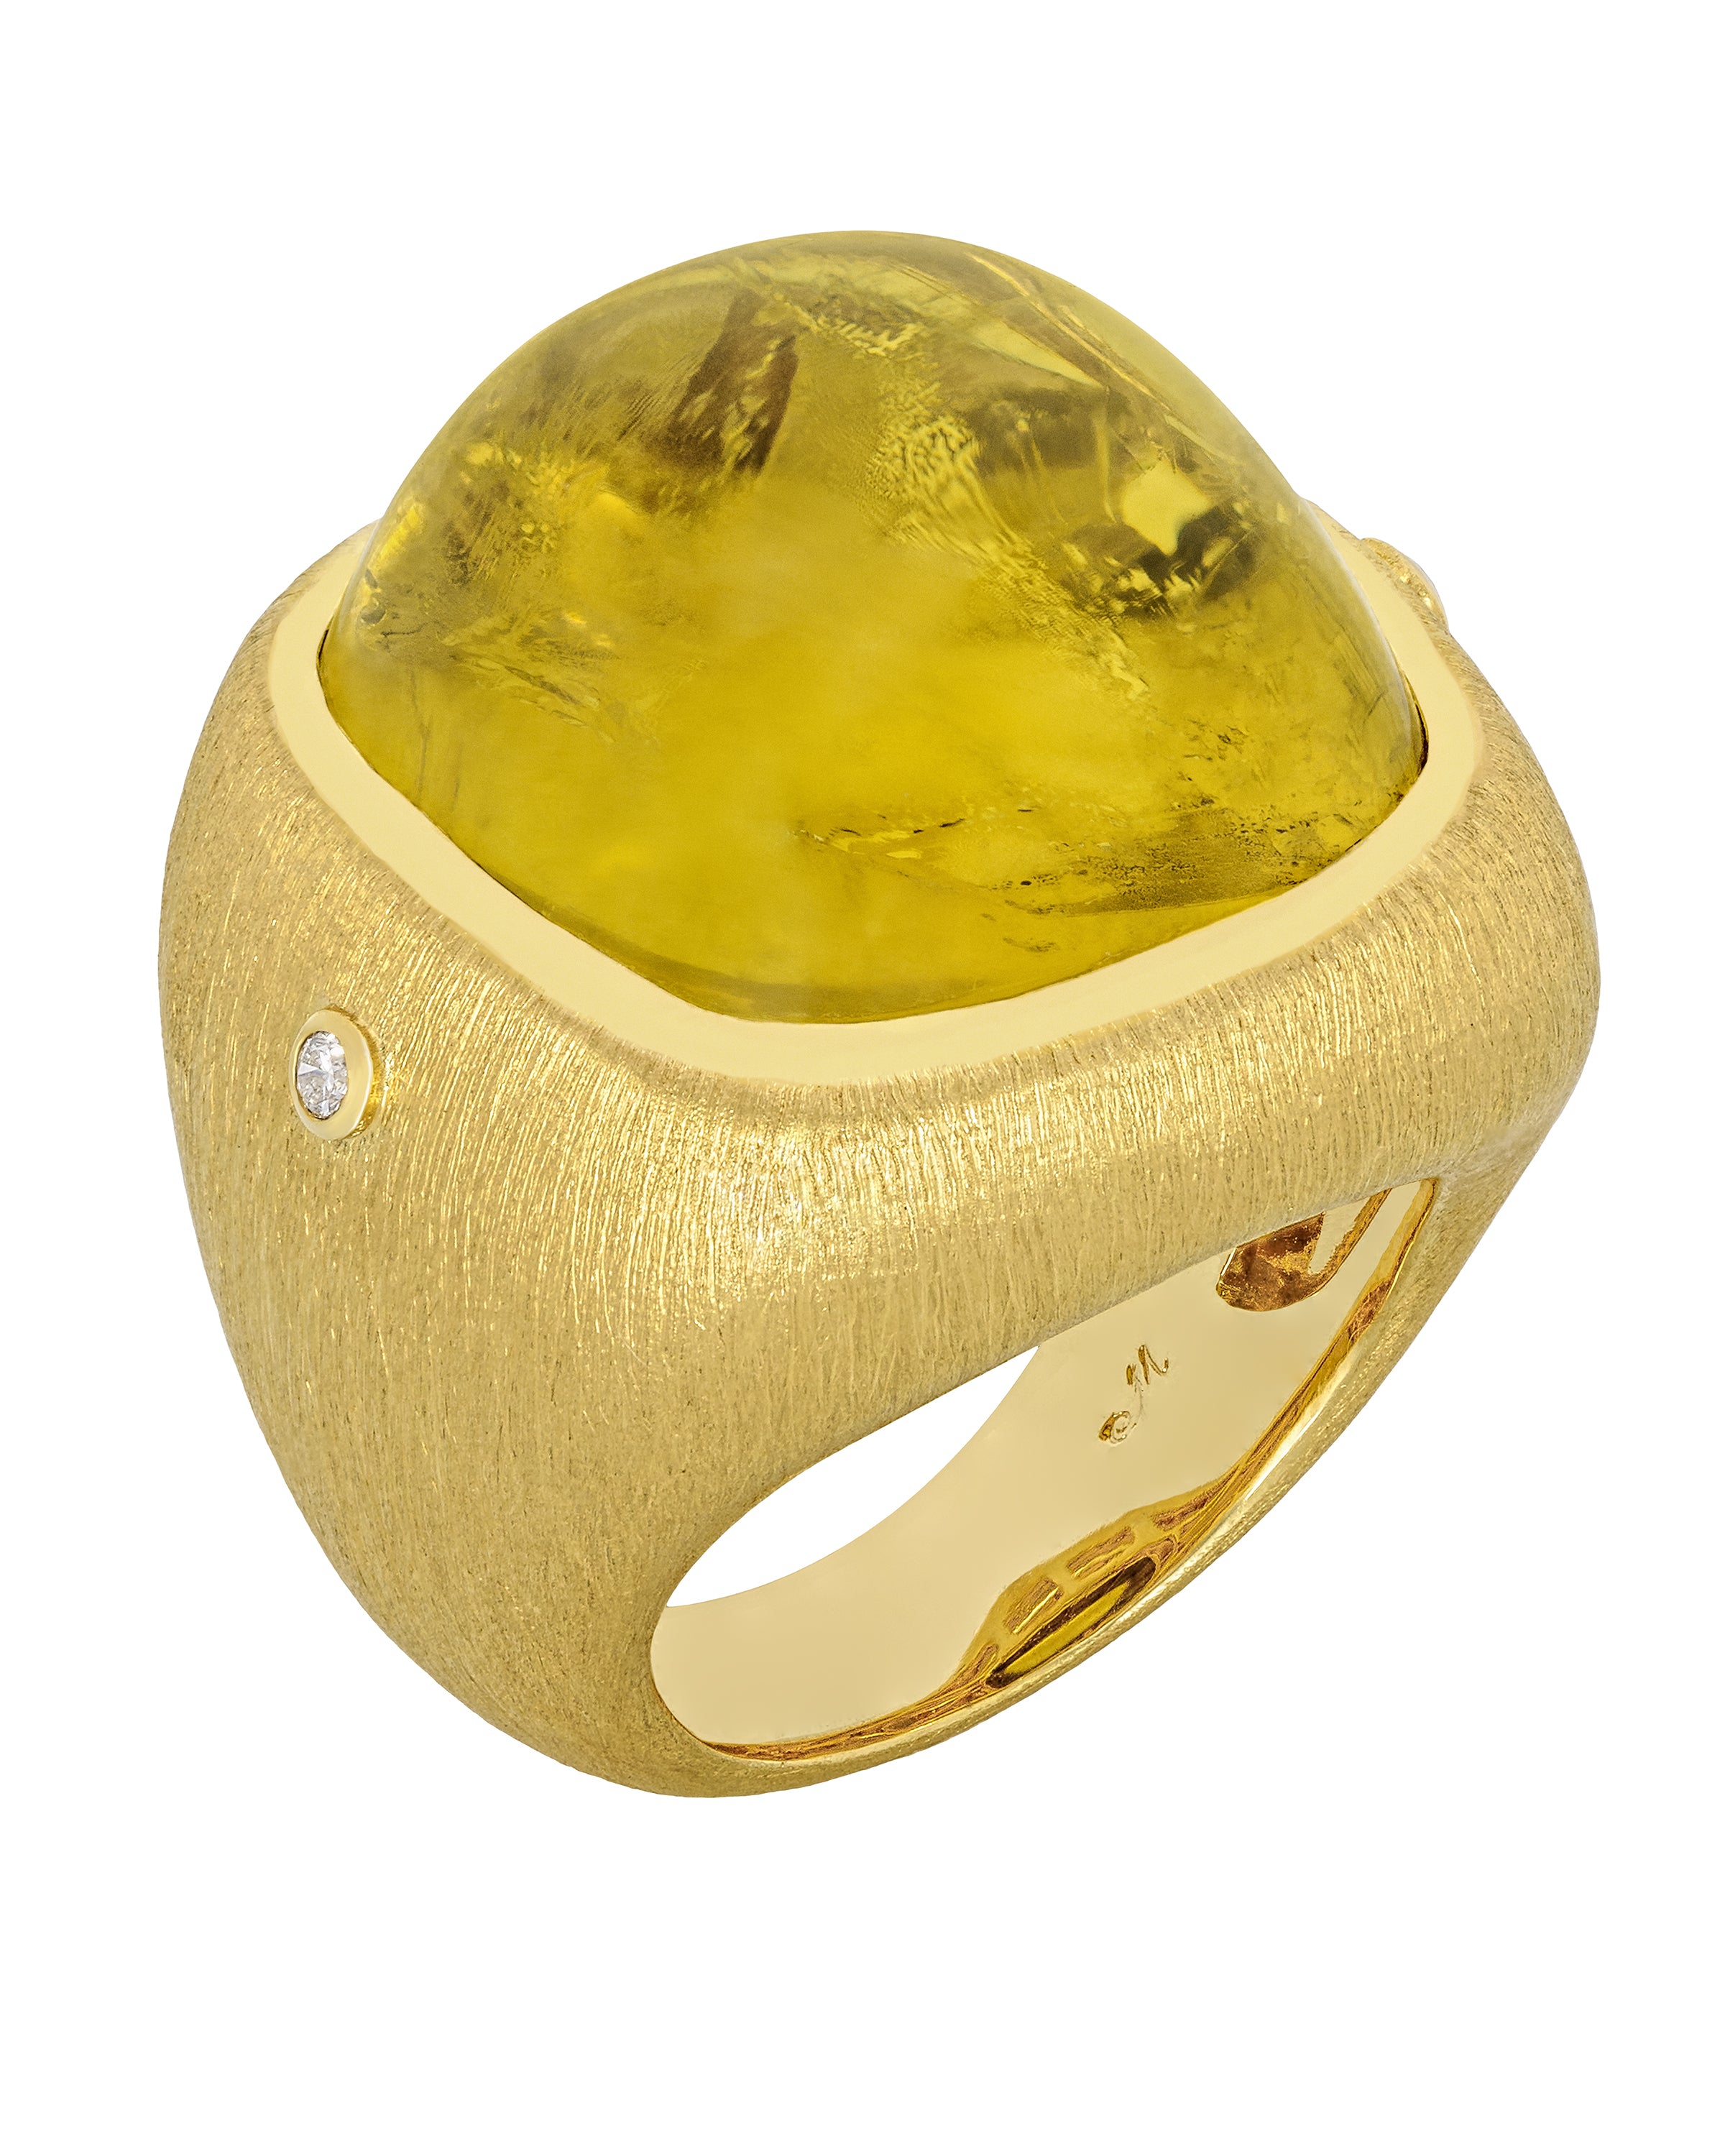 "Yellow Bee" tourmaline ring enhanced with diamonds, crafted in 18 karat satin finish yellow gold.